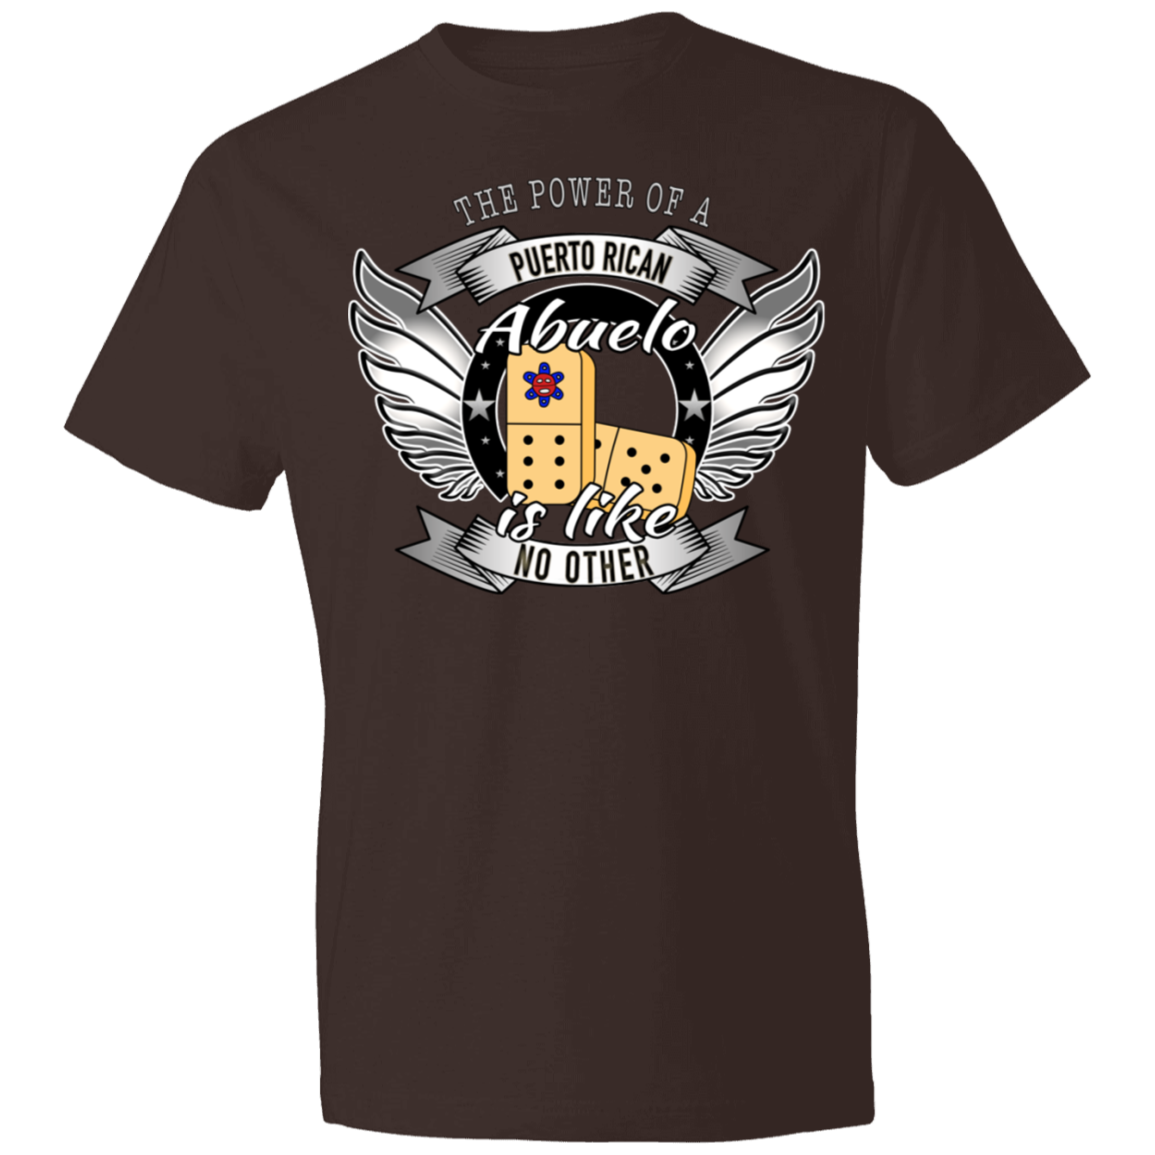 Abuelo Power T-Shirt 4.5 oz - Puerto Rican Pride